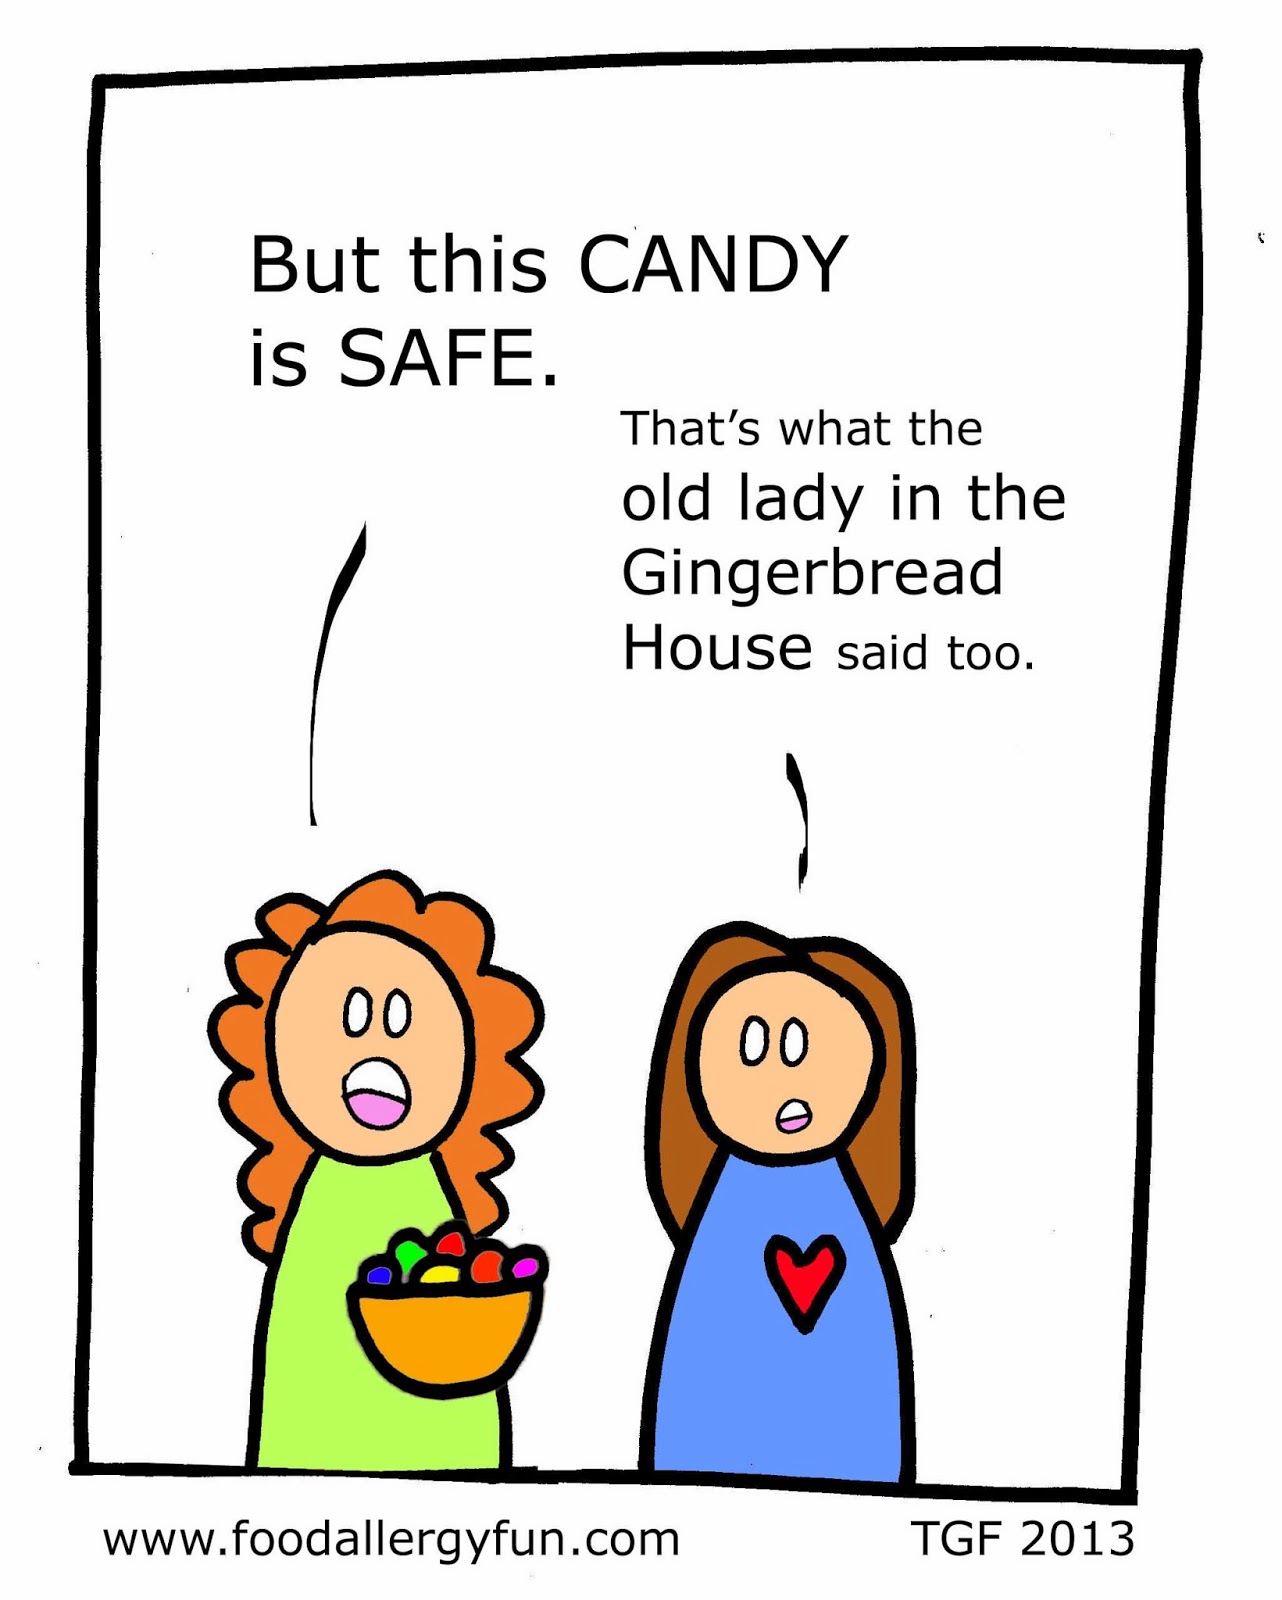 Food Allergy Fun: Safe Candy - Food Allergy Fun Cartoon